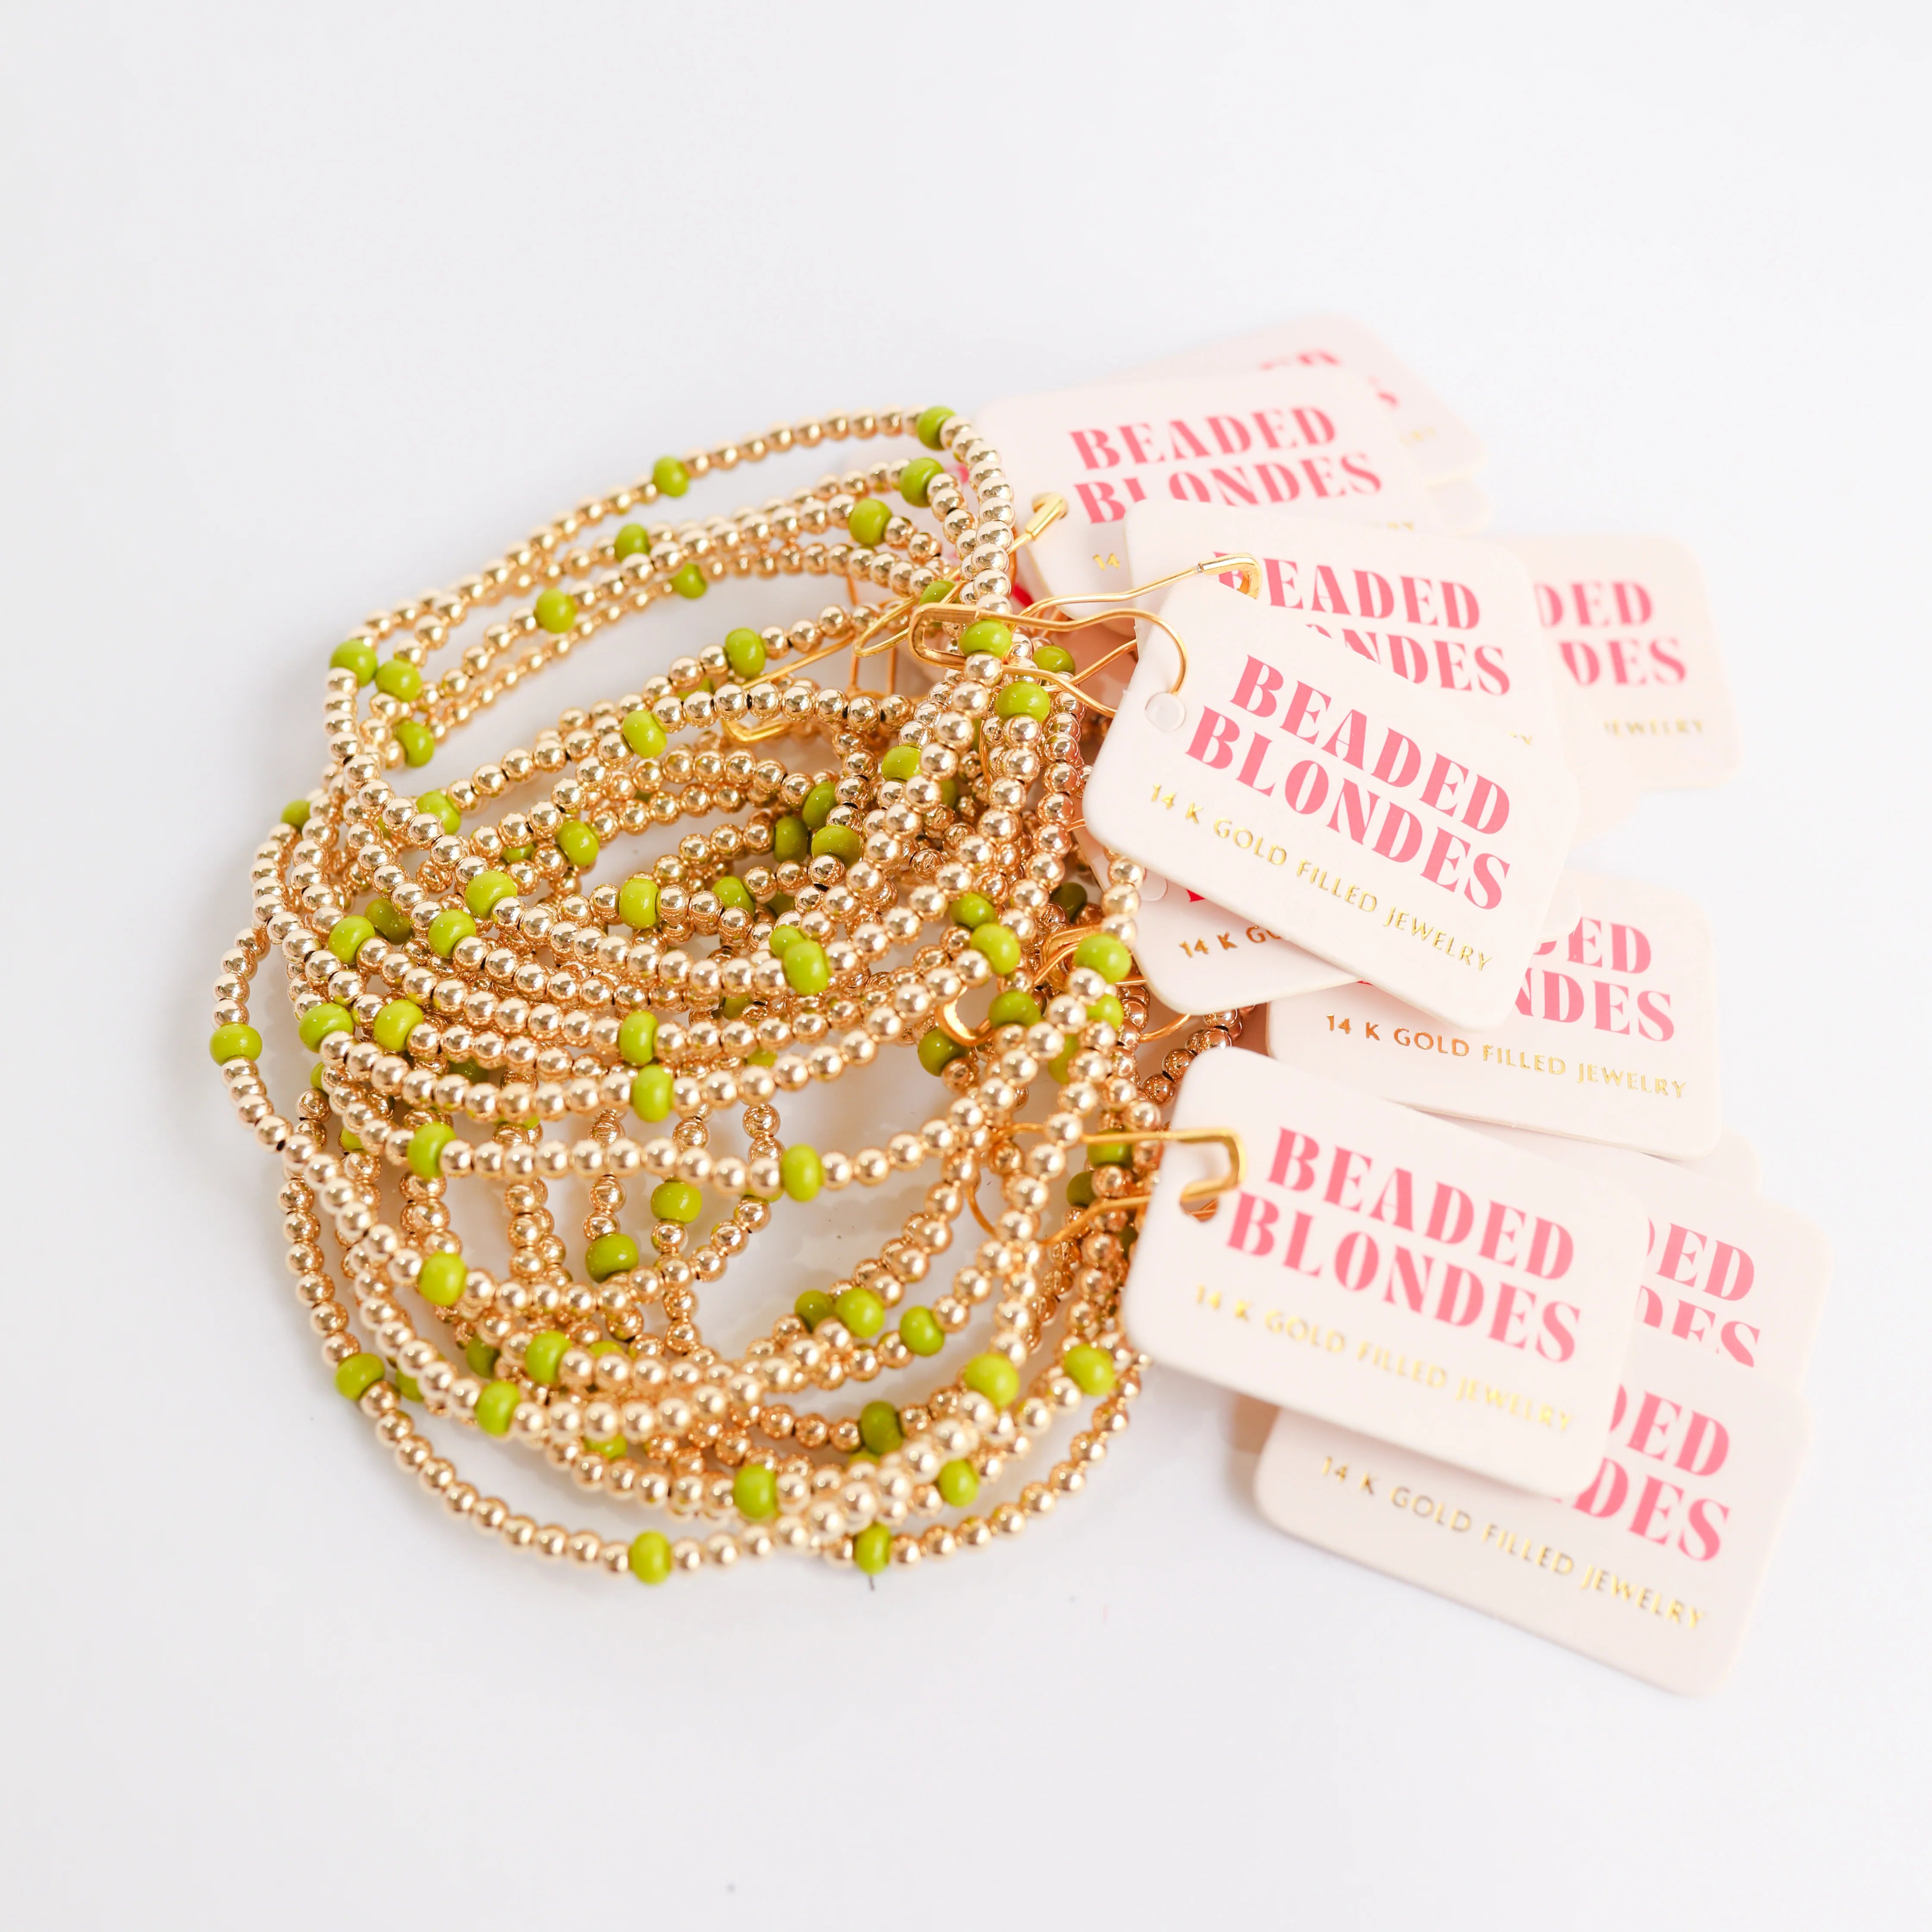 Beaded Blondes | Lime Green Poppi Bracelet - Giddy Up Glamour Boutique